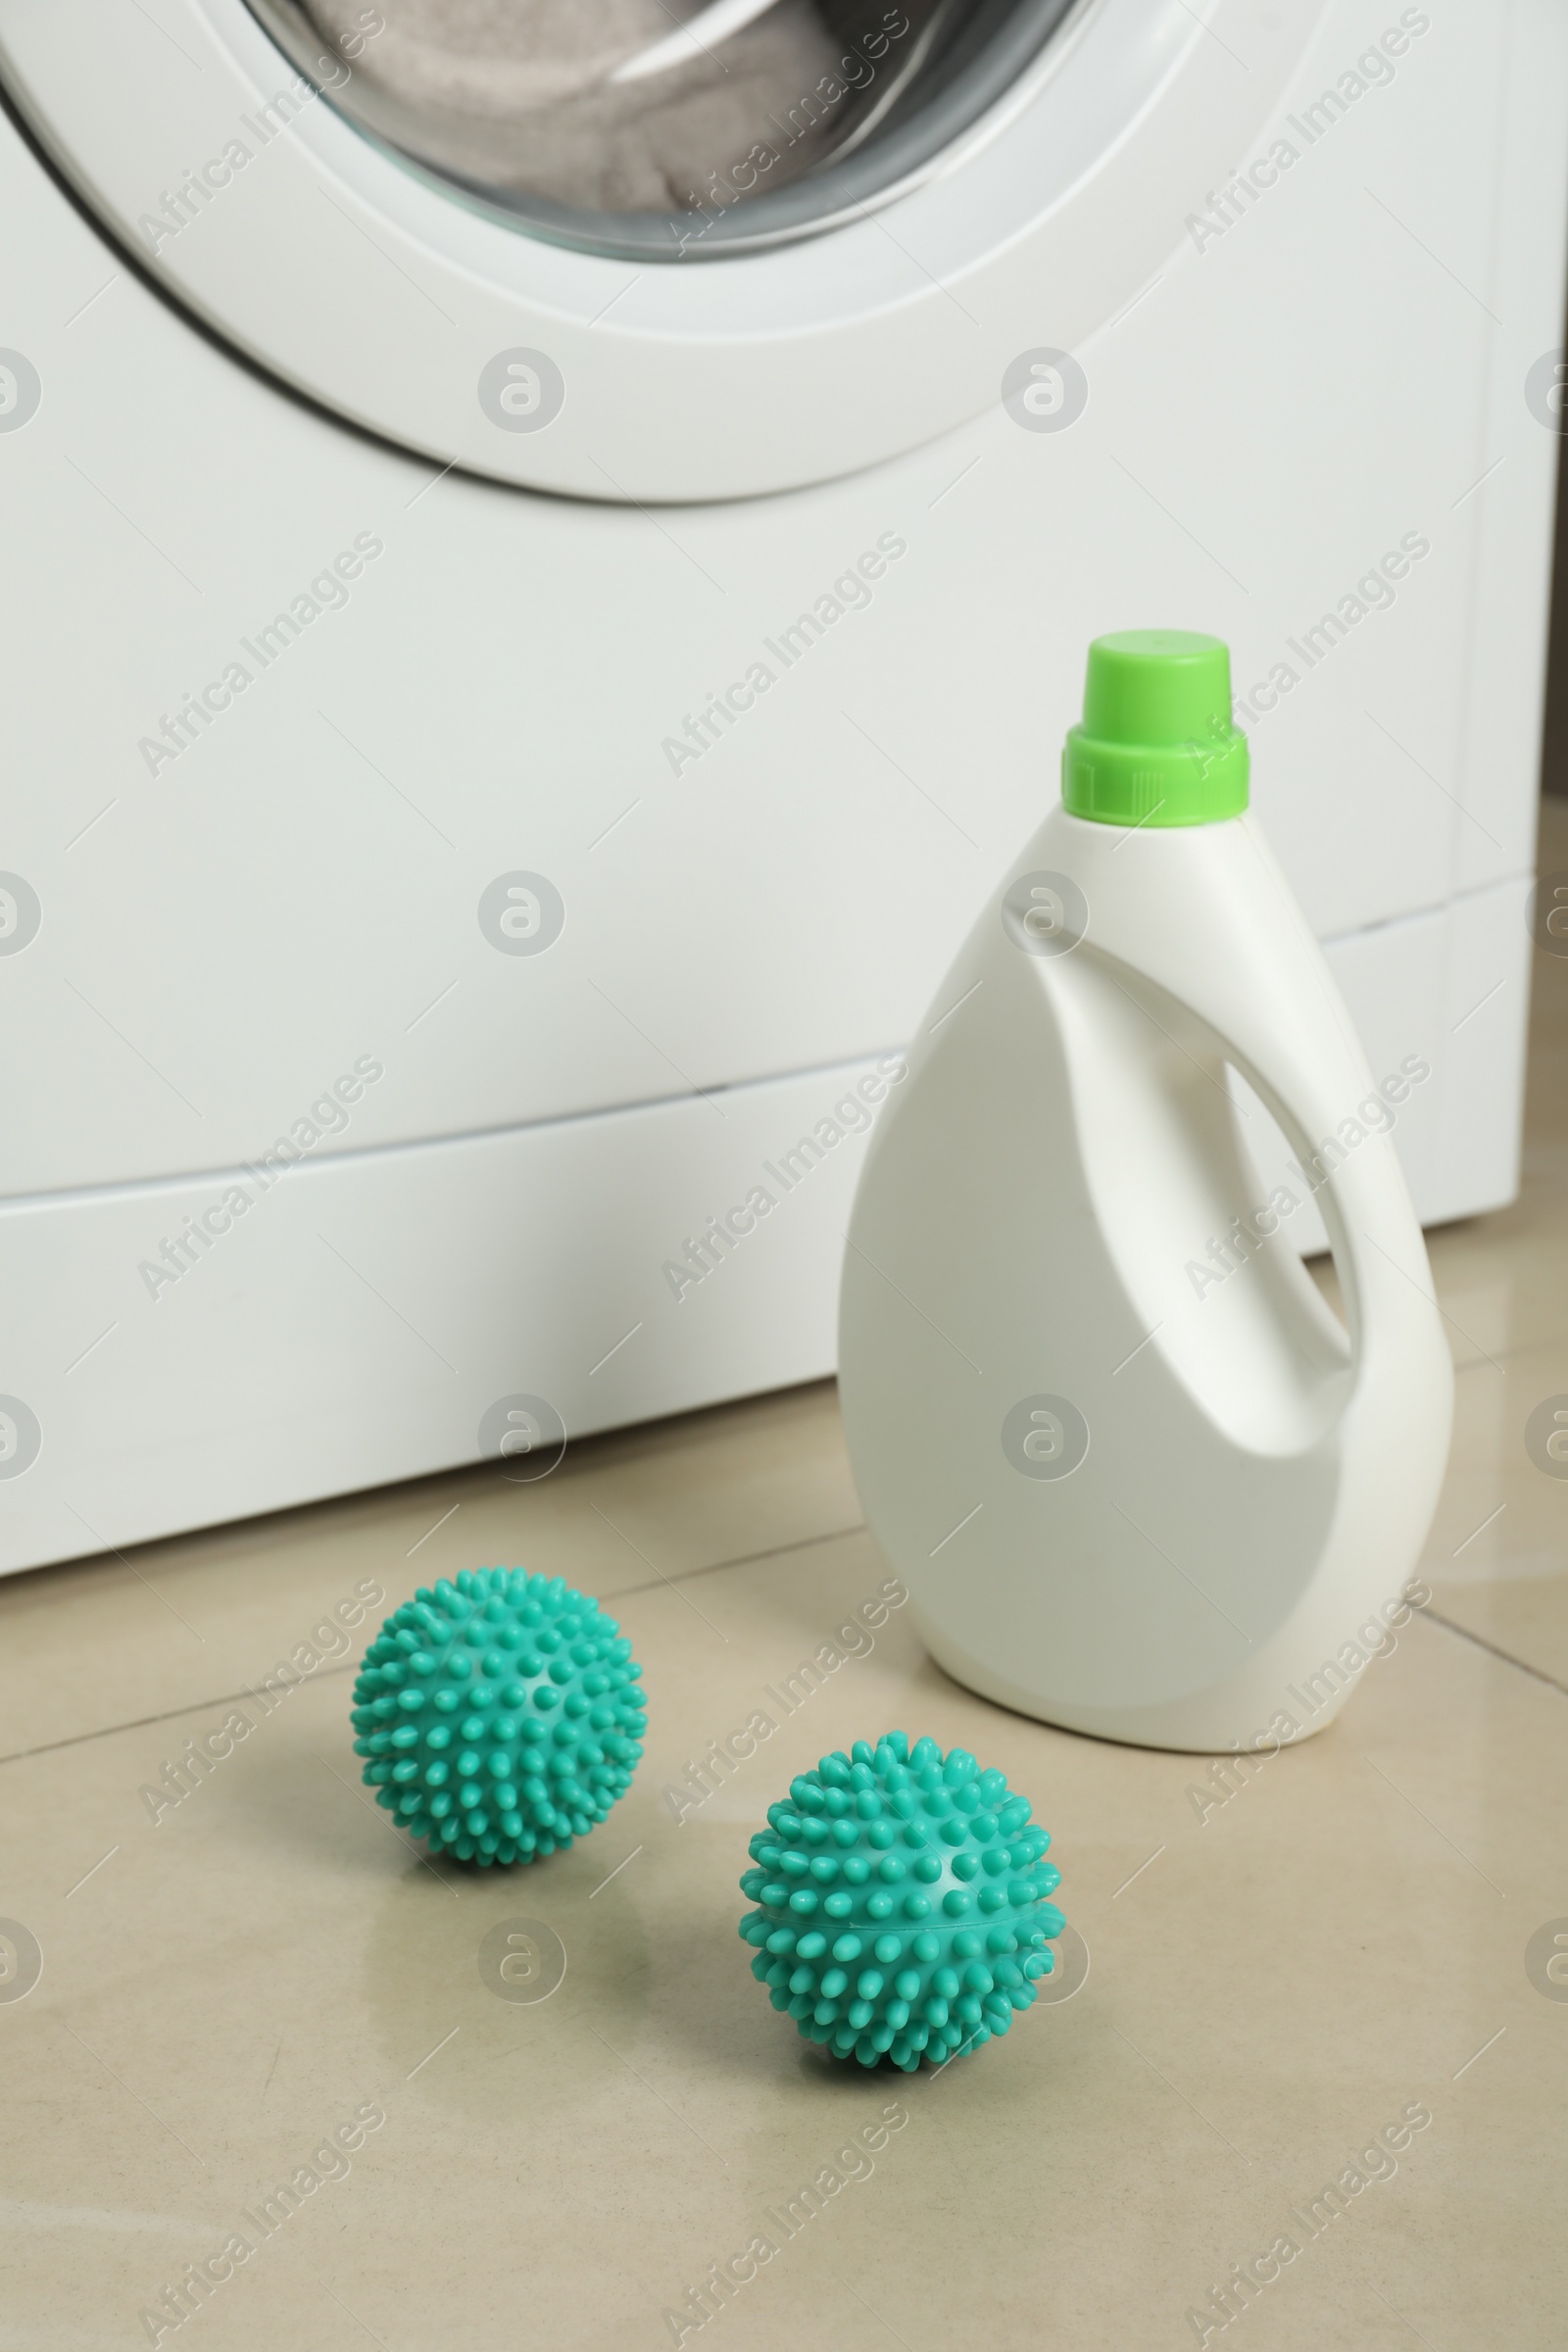 Photo of Laundry detergent and dryer balls near washing machine on floor